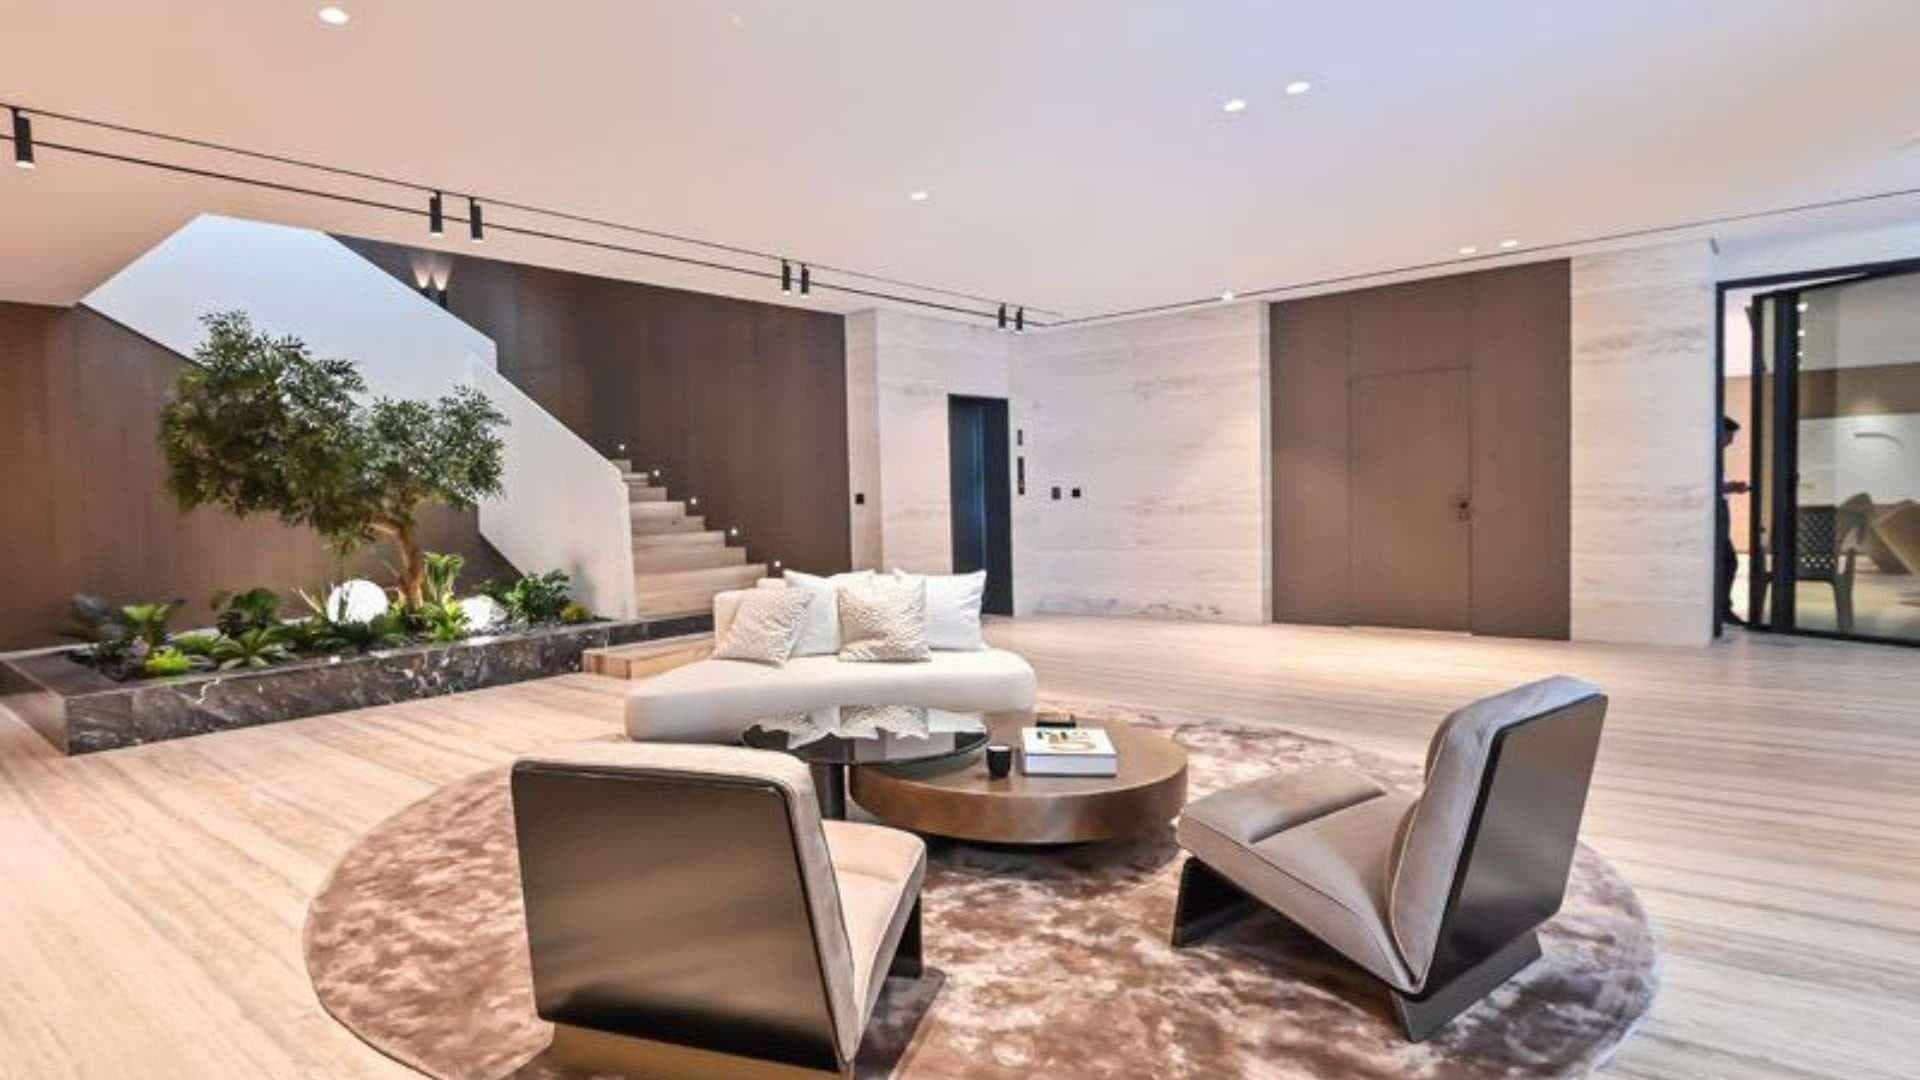 7 Bedroom Villa For Sale Dubai Hills Lp20693 1a5fce41cde66600.jpg